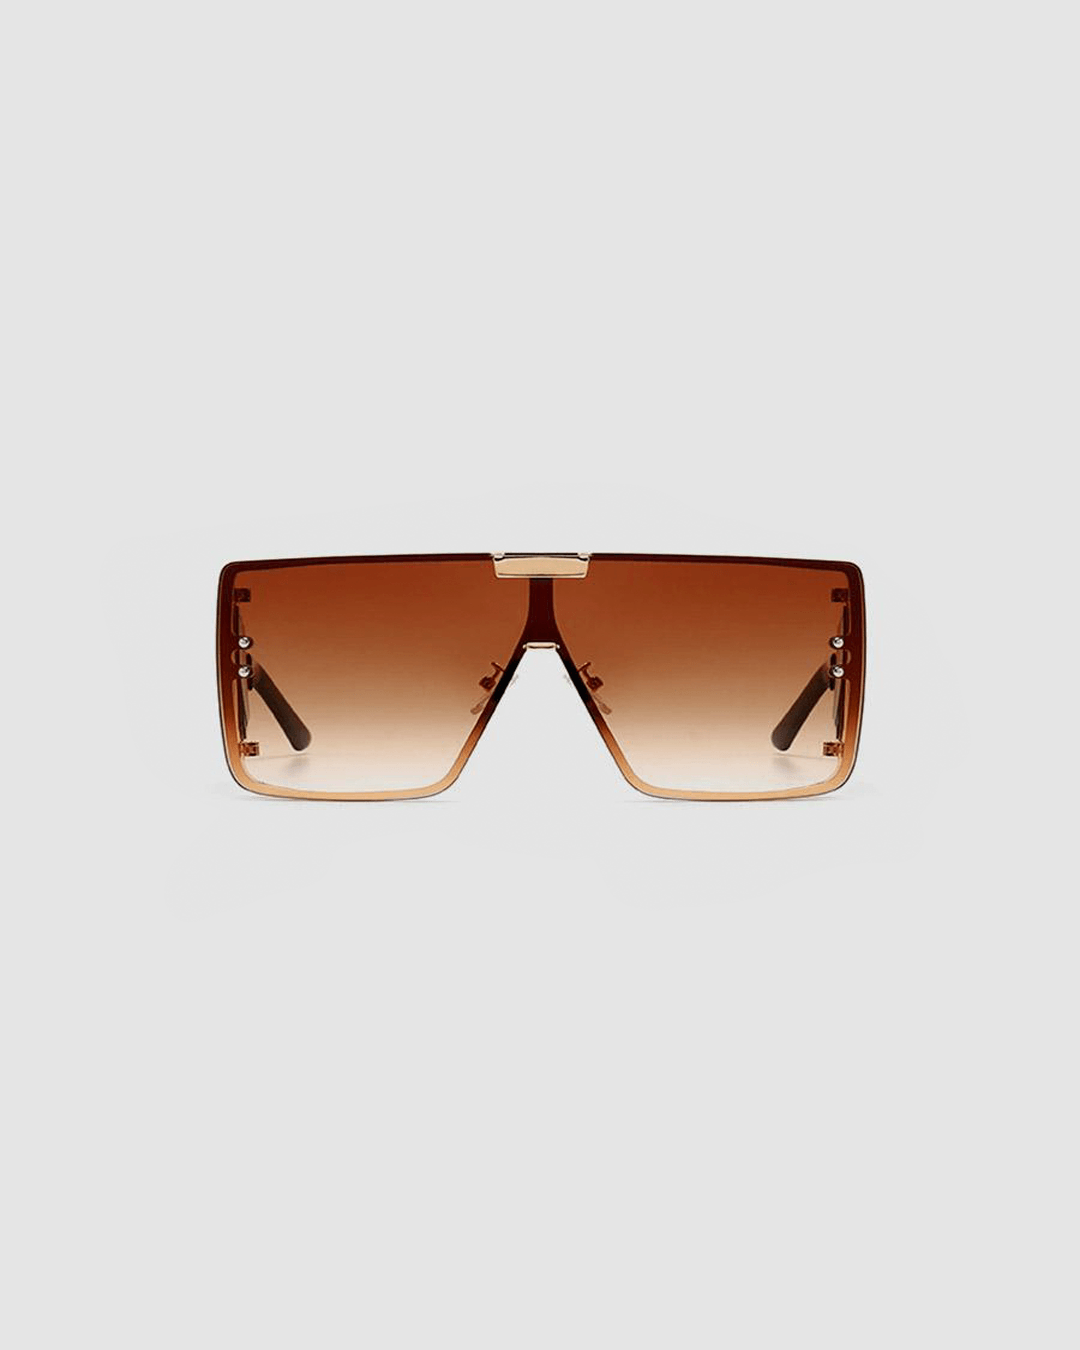 Clemont Sunglasses - Sunvoss